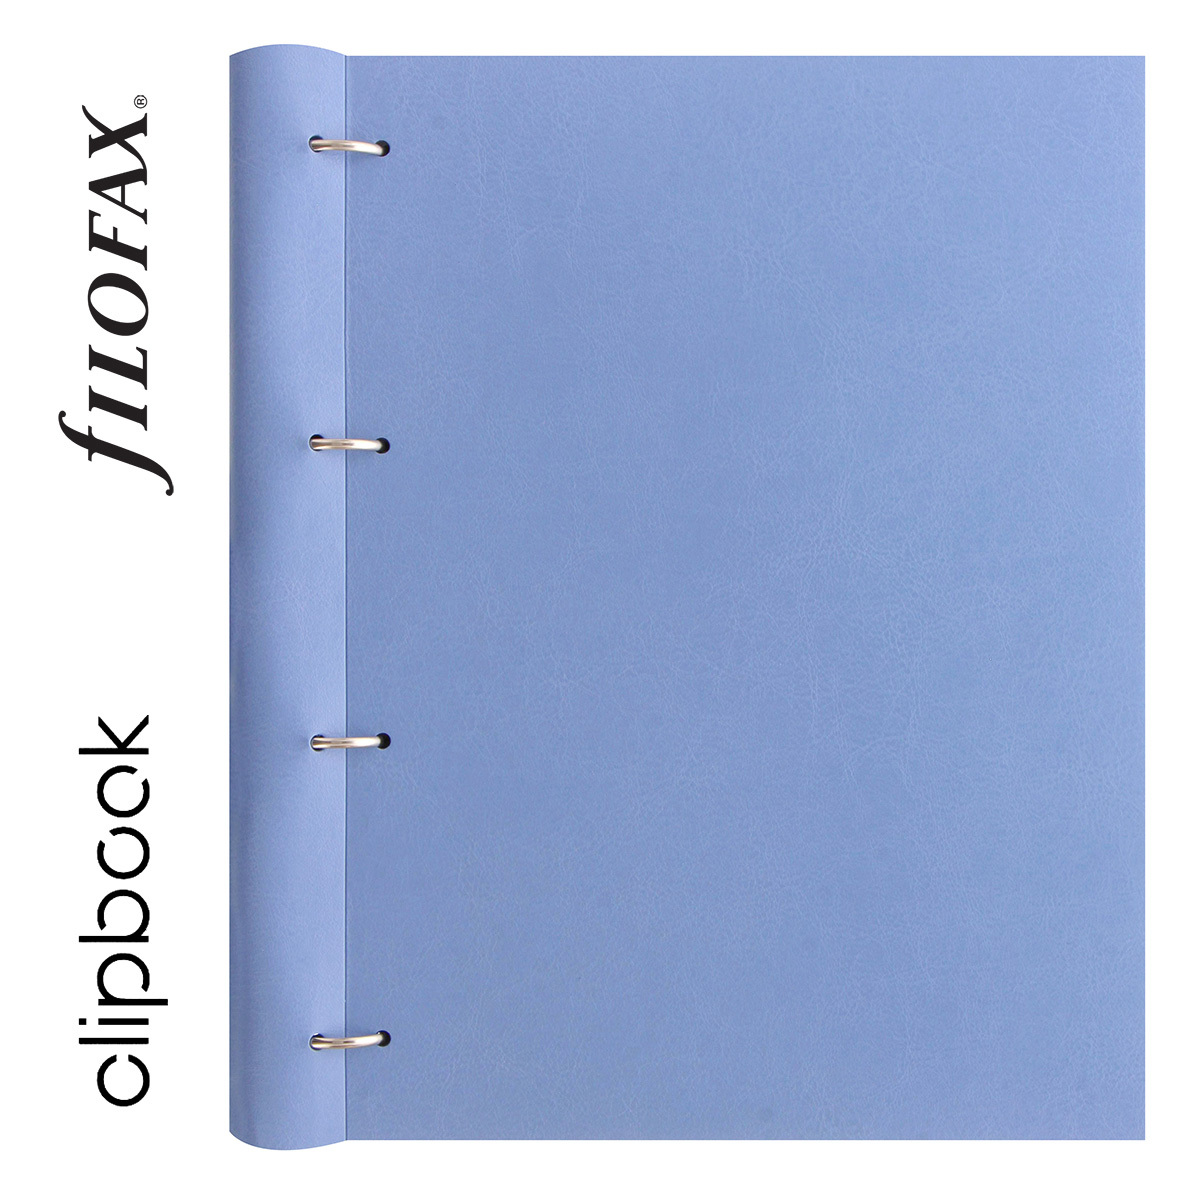 Filofax Clipbook Classic Pastel A4 Égkék